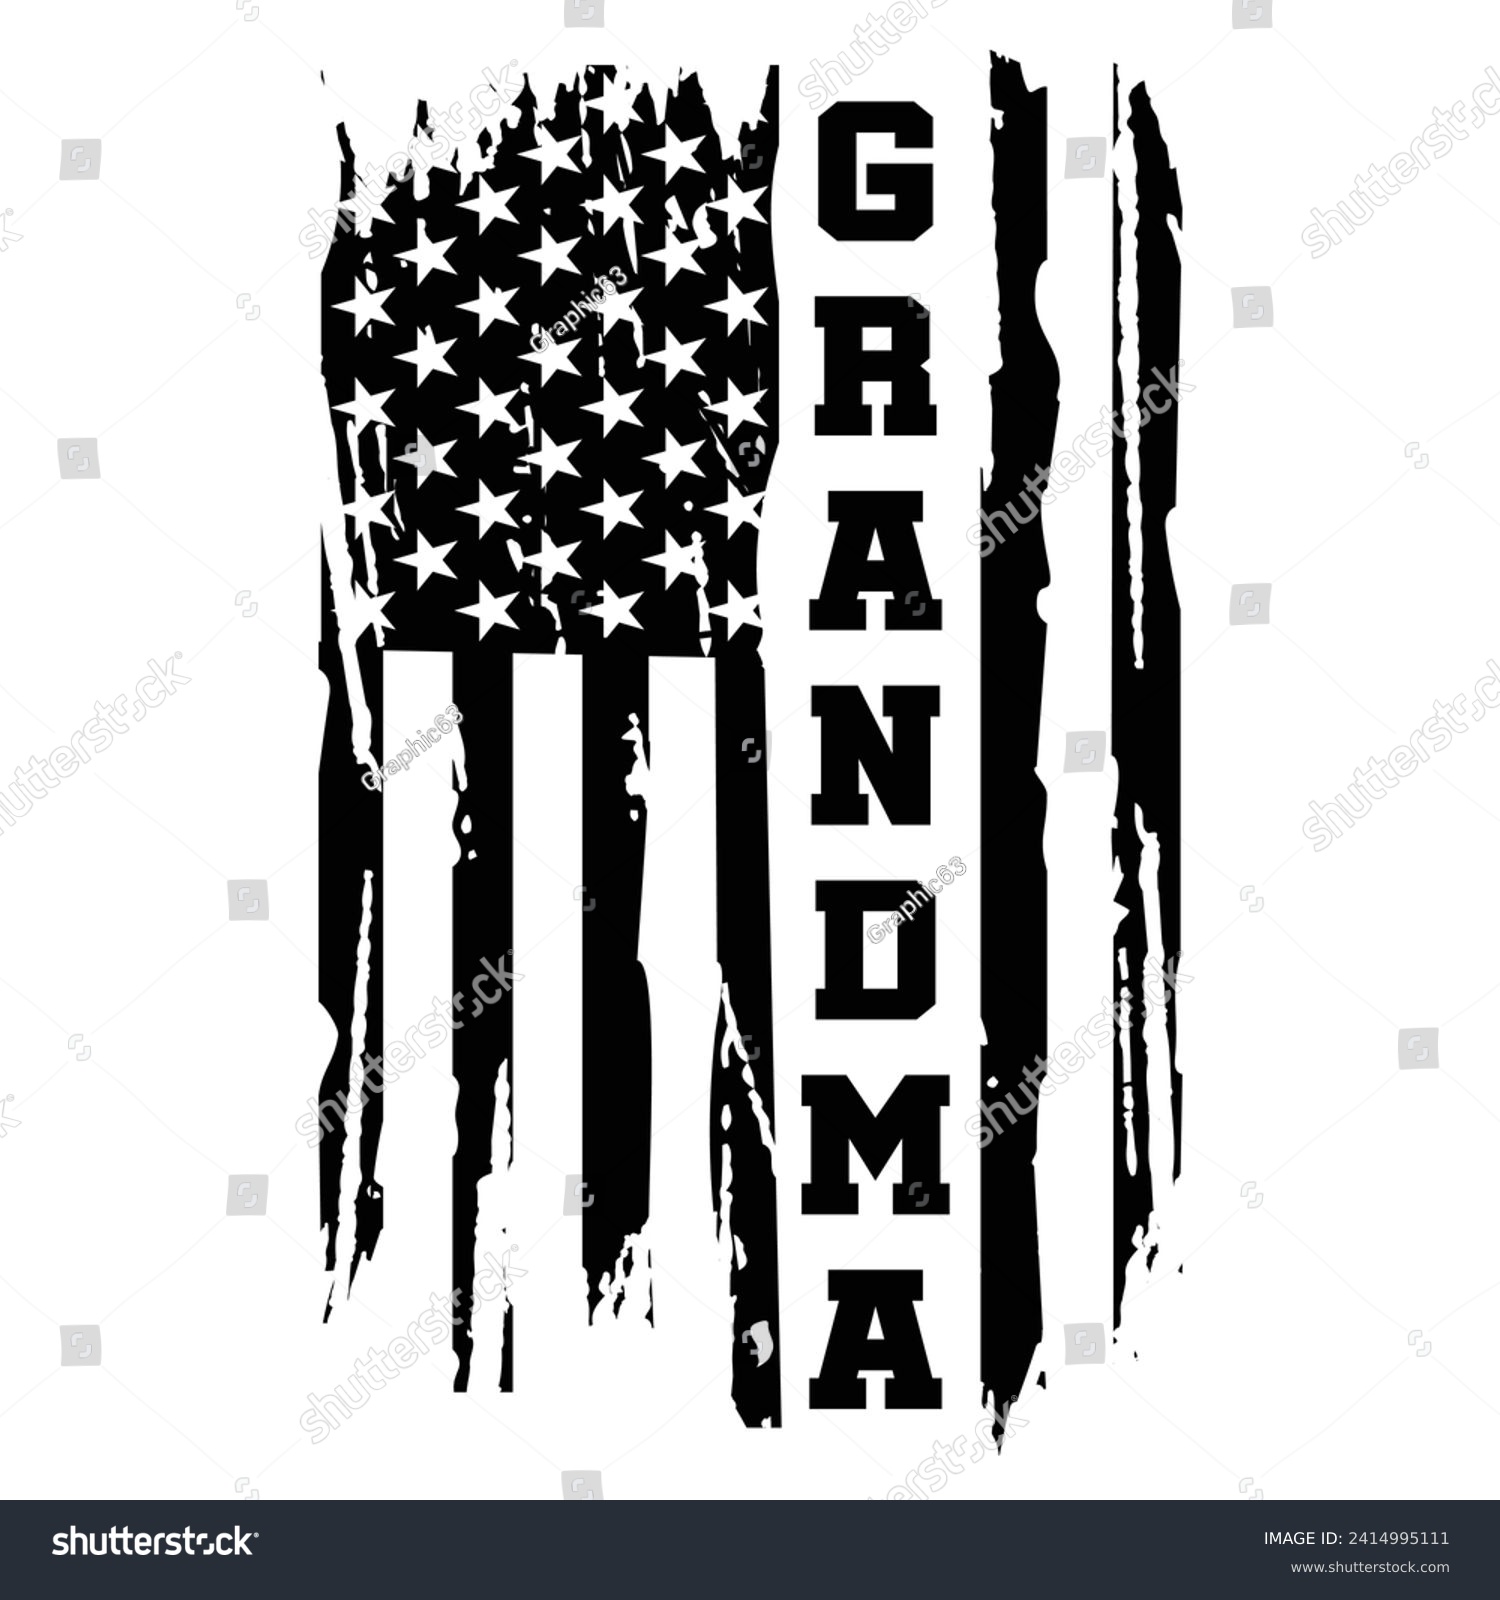 SVG of Distressed Grandma American Usa Flag Grandma Design For T Shirt Poster Banner Backround Print Vector Eps Illustrations. svg